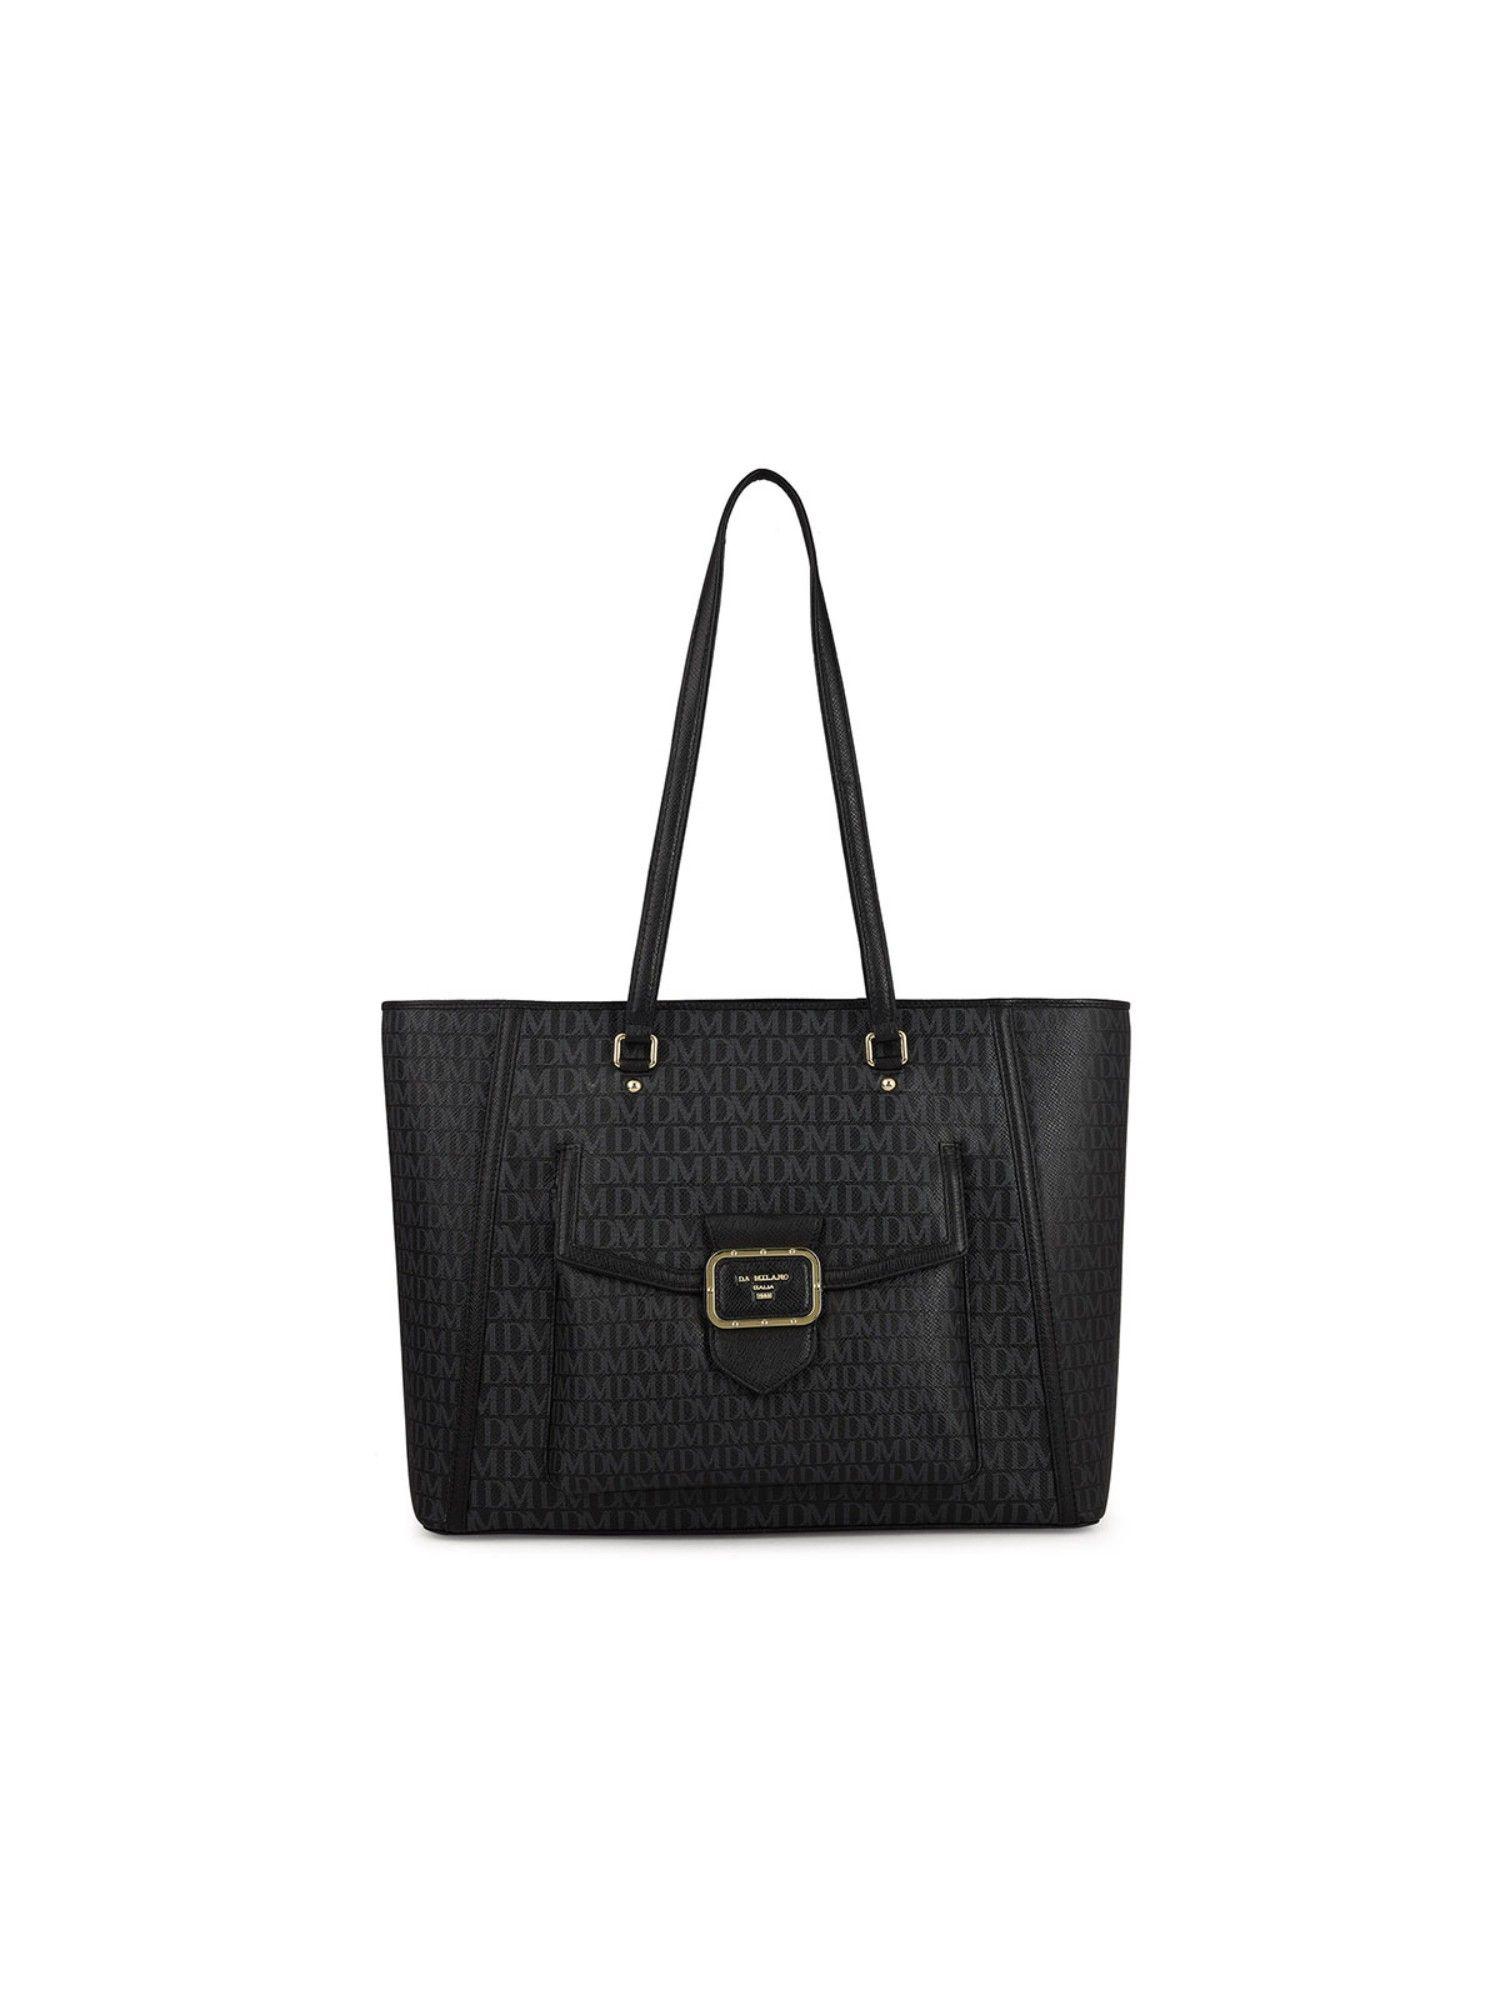 women's genuine leather black tote bag